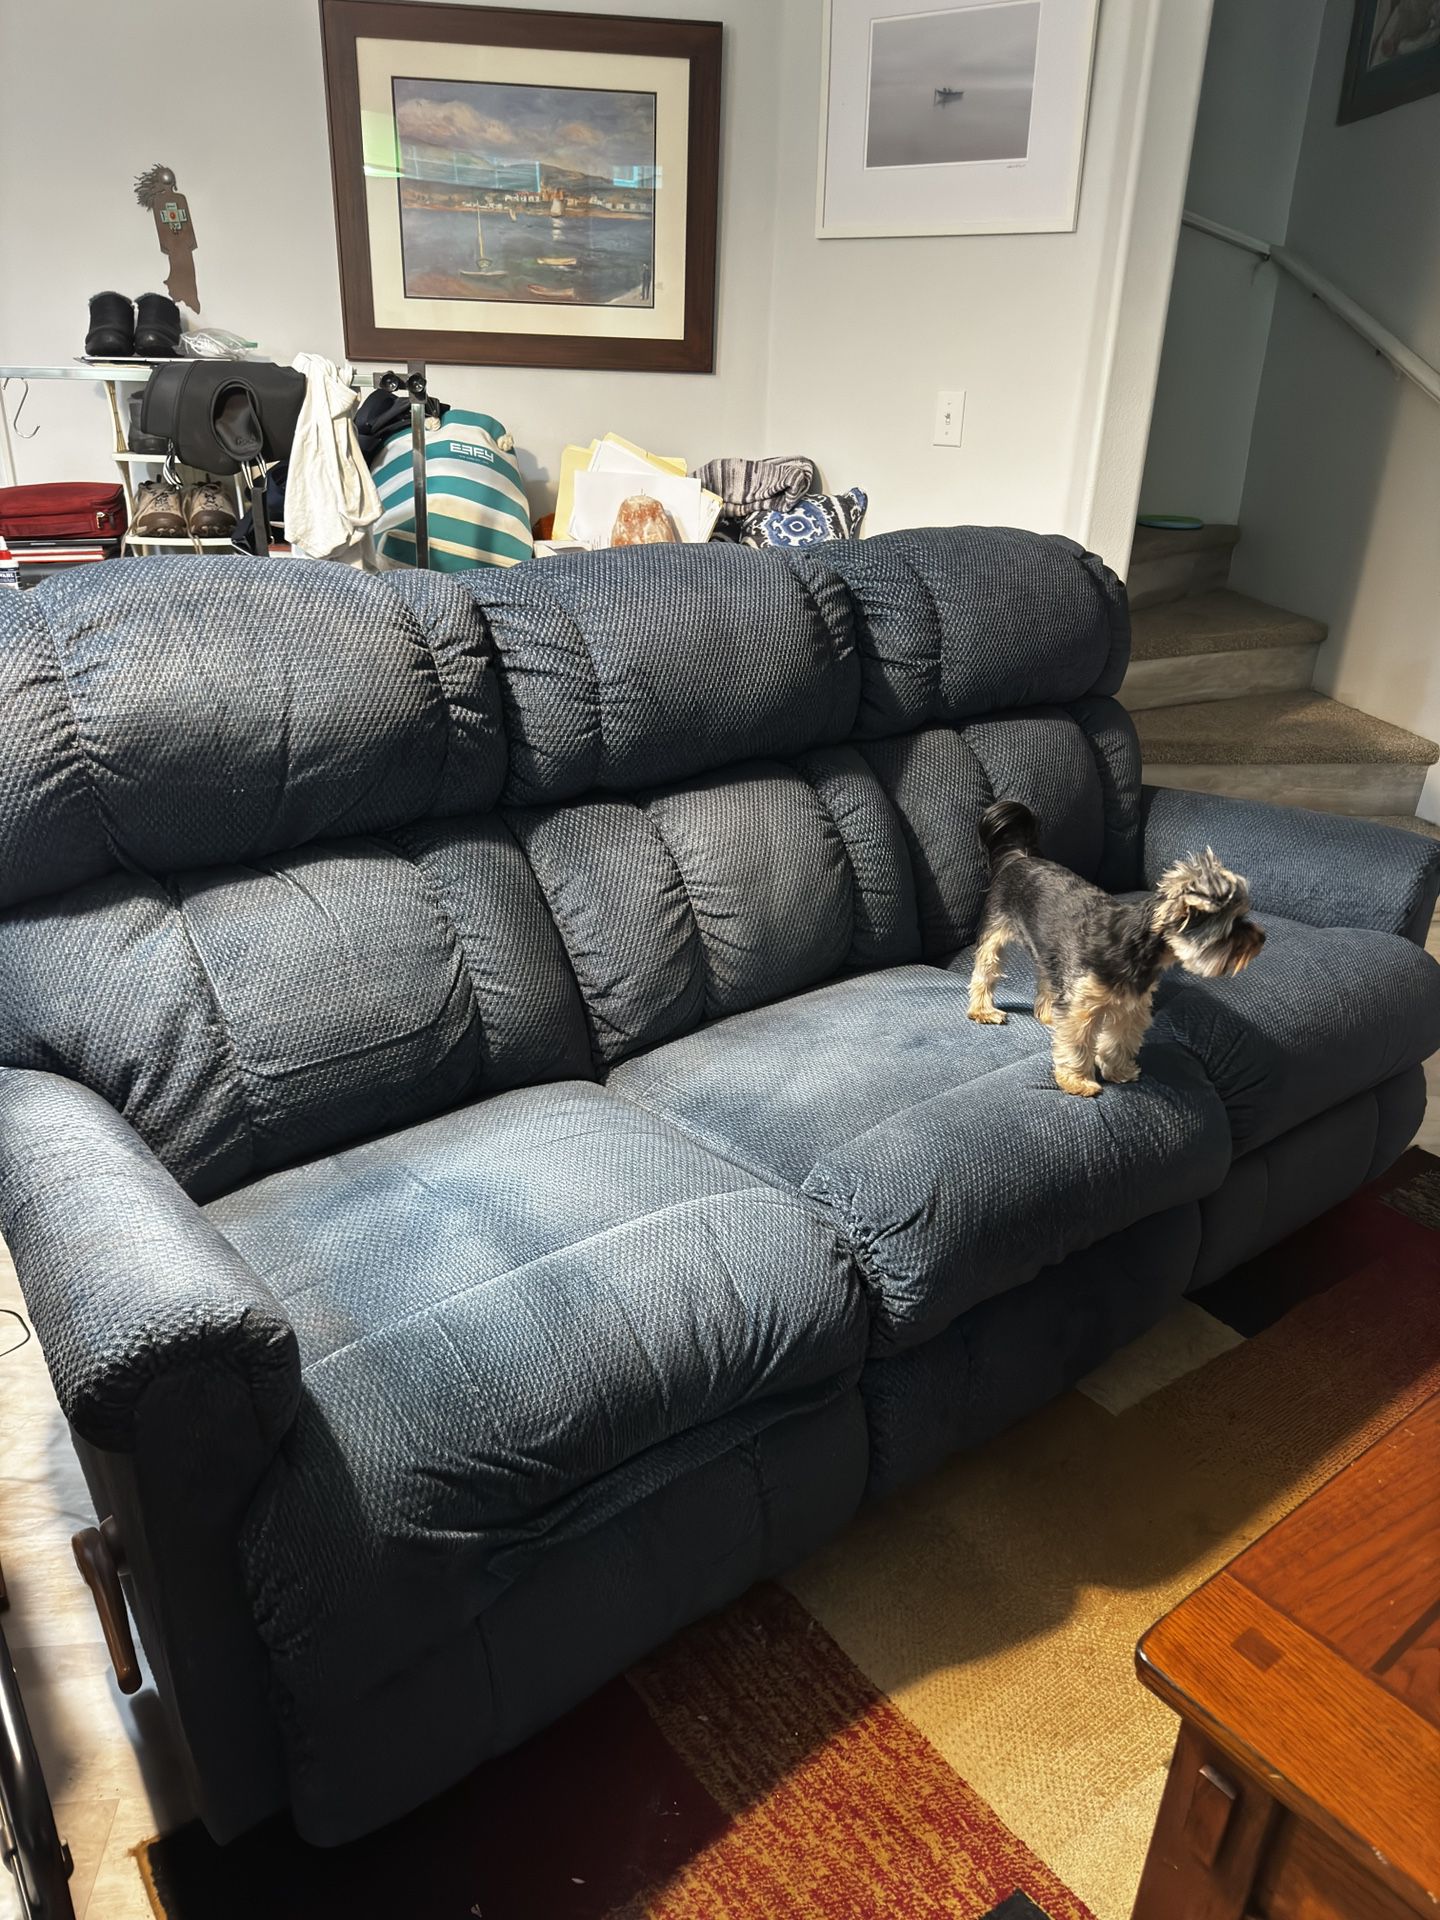 Lazy Boy Dual Recliner Sofa